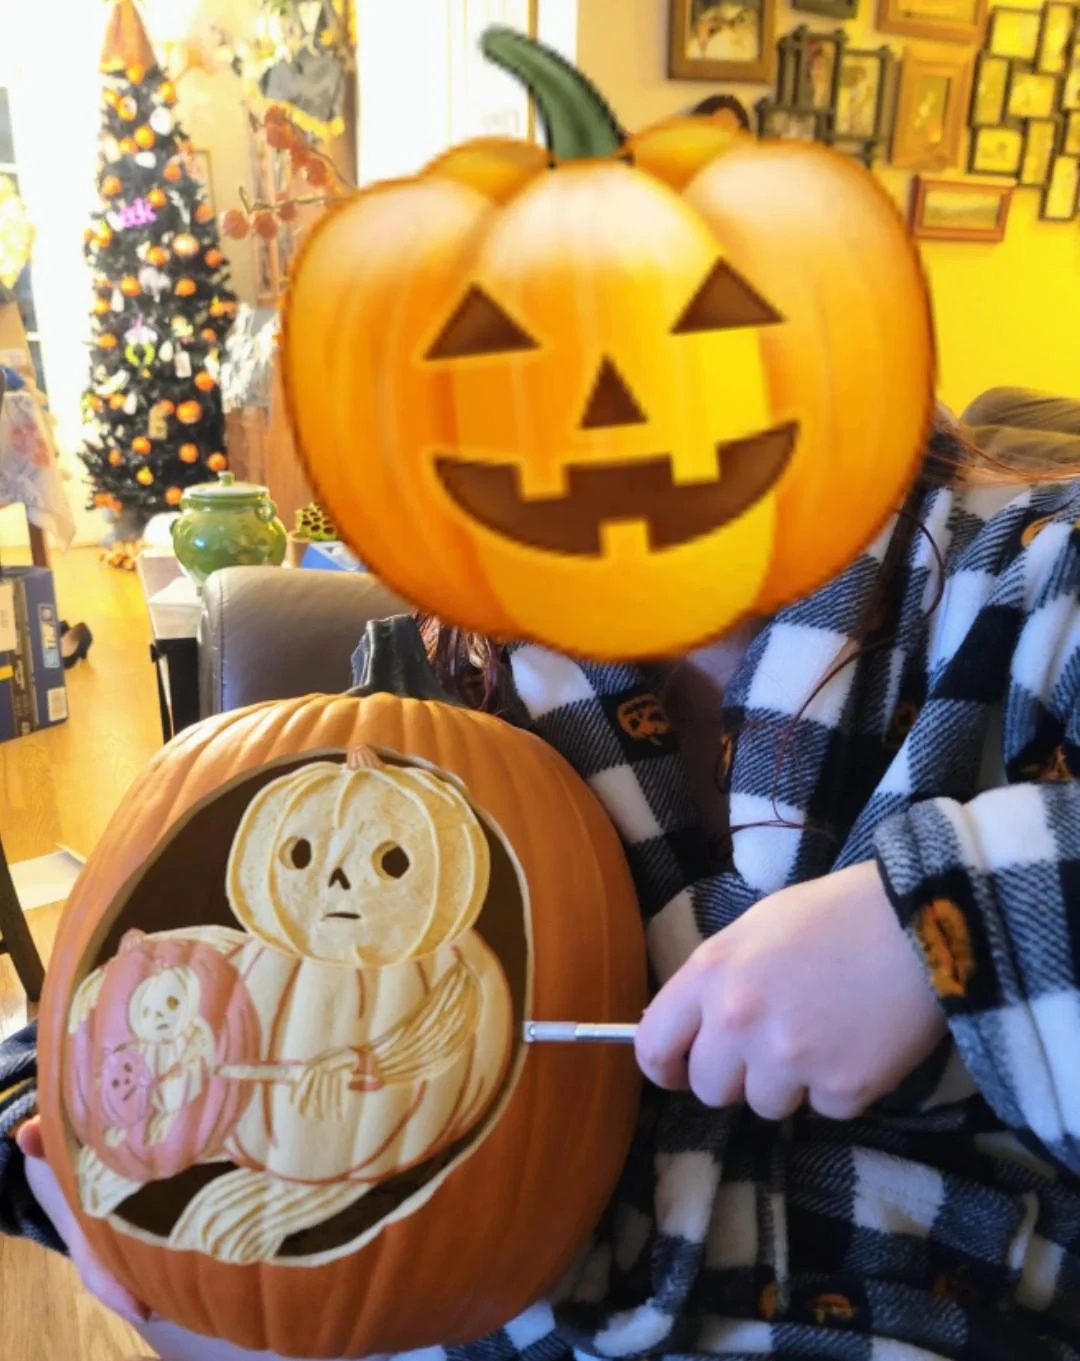 Man carving pumpkin of man carving pumpkin, repeated.